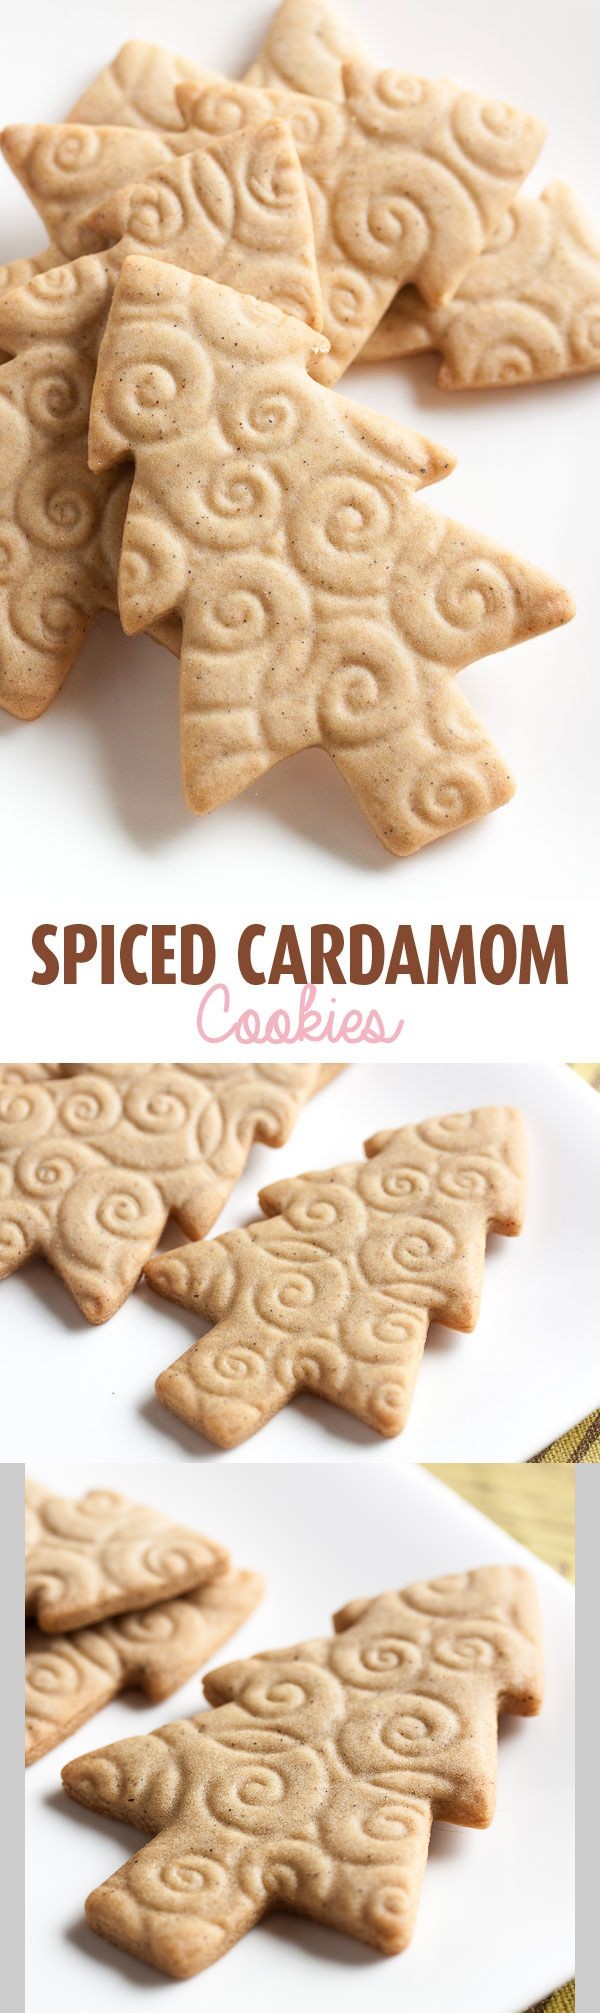 Spiced cardamom cookies